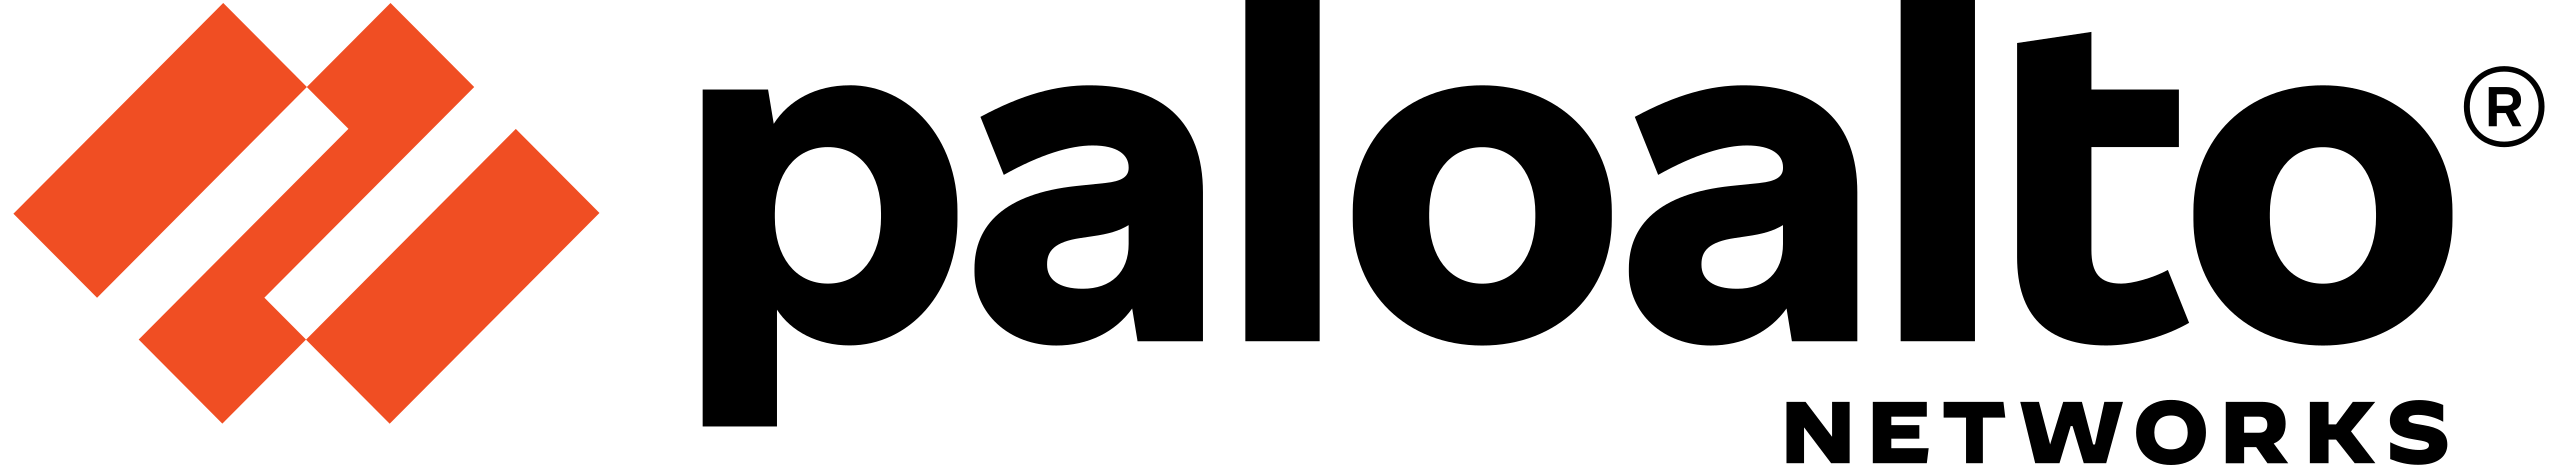 PaloAltoNetworks 2020 Logo.svg